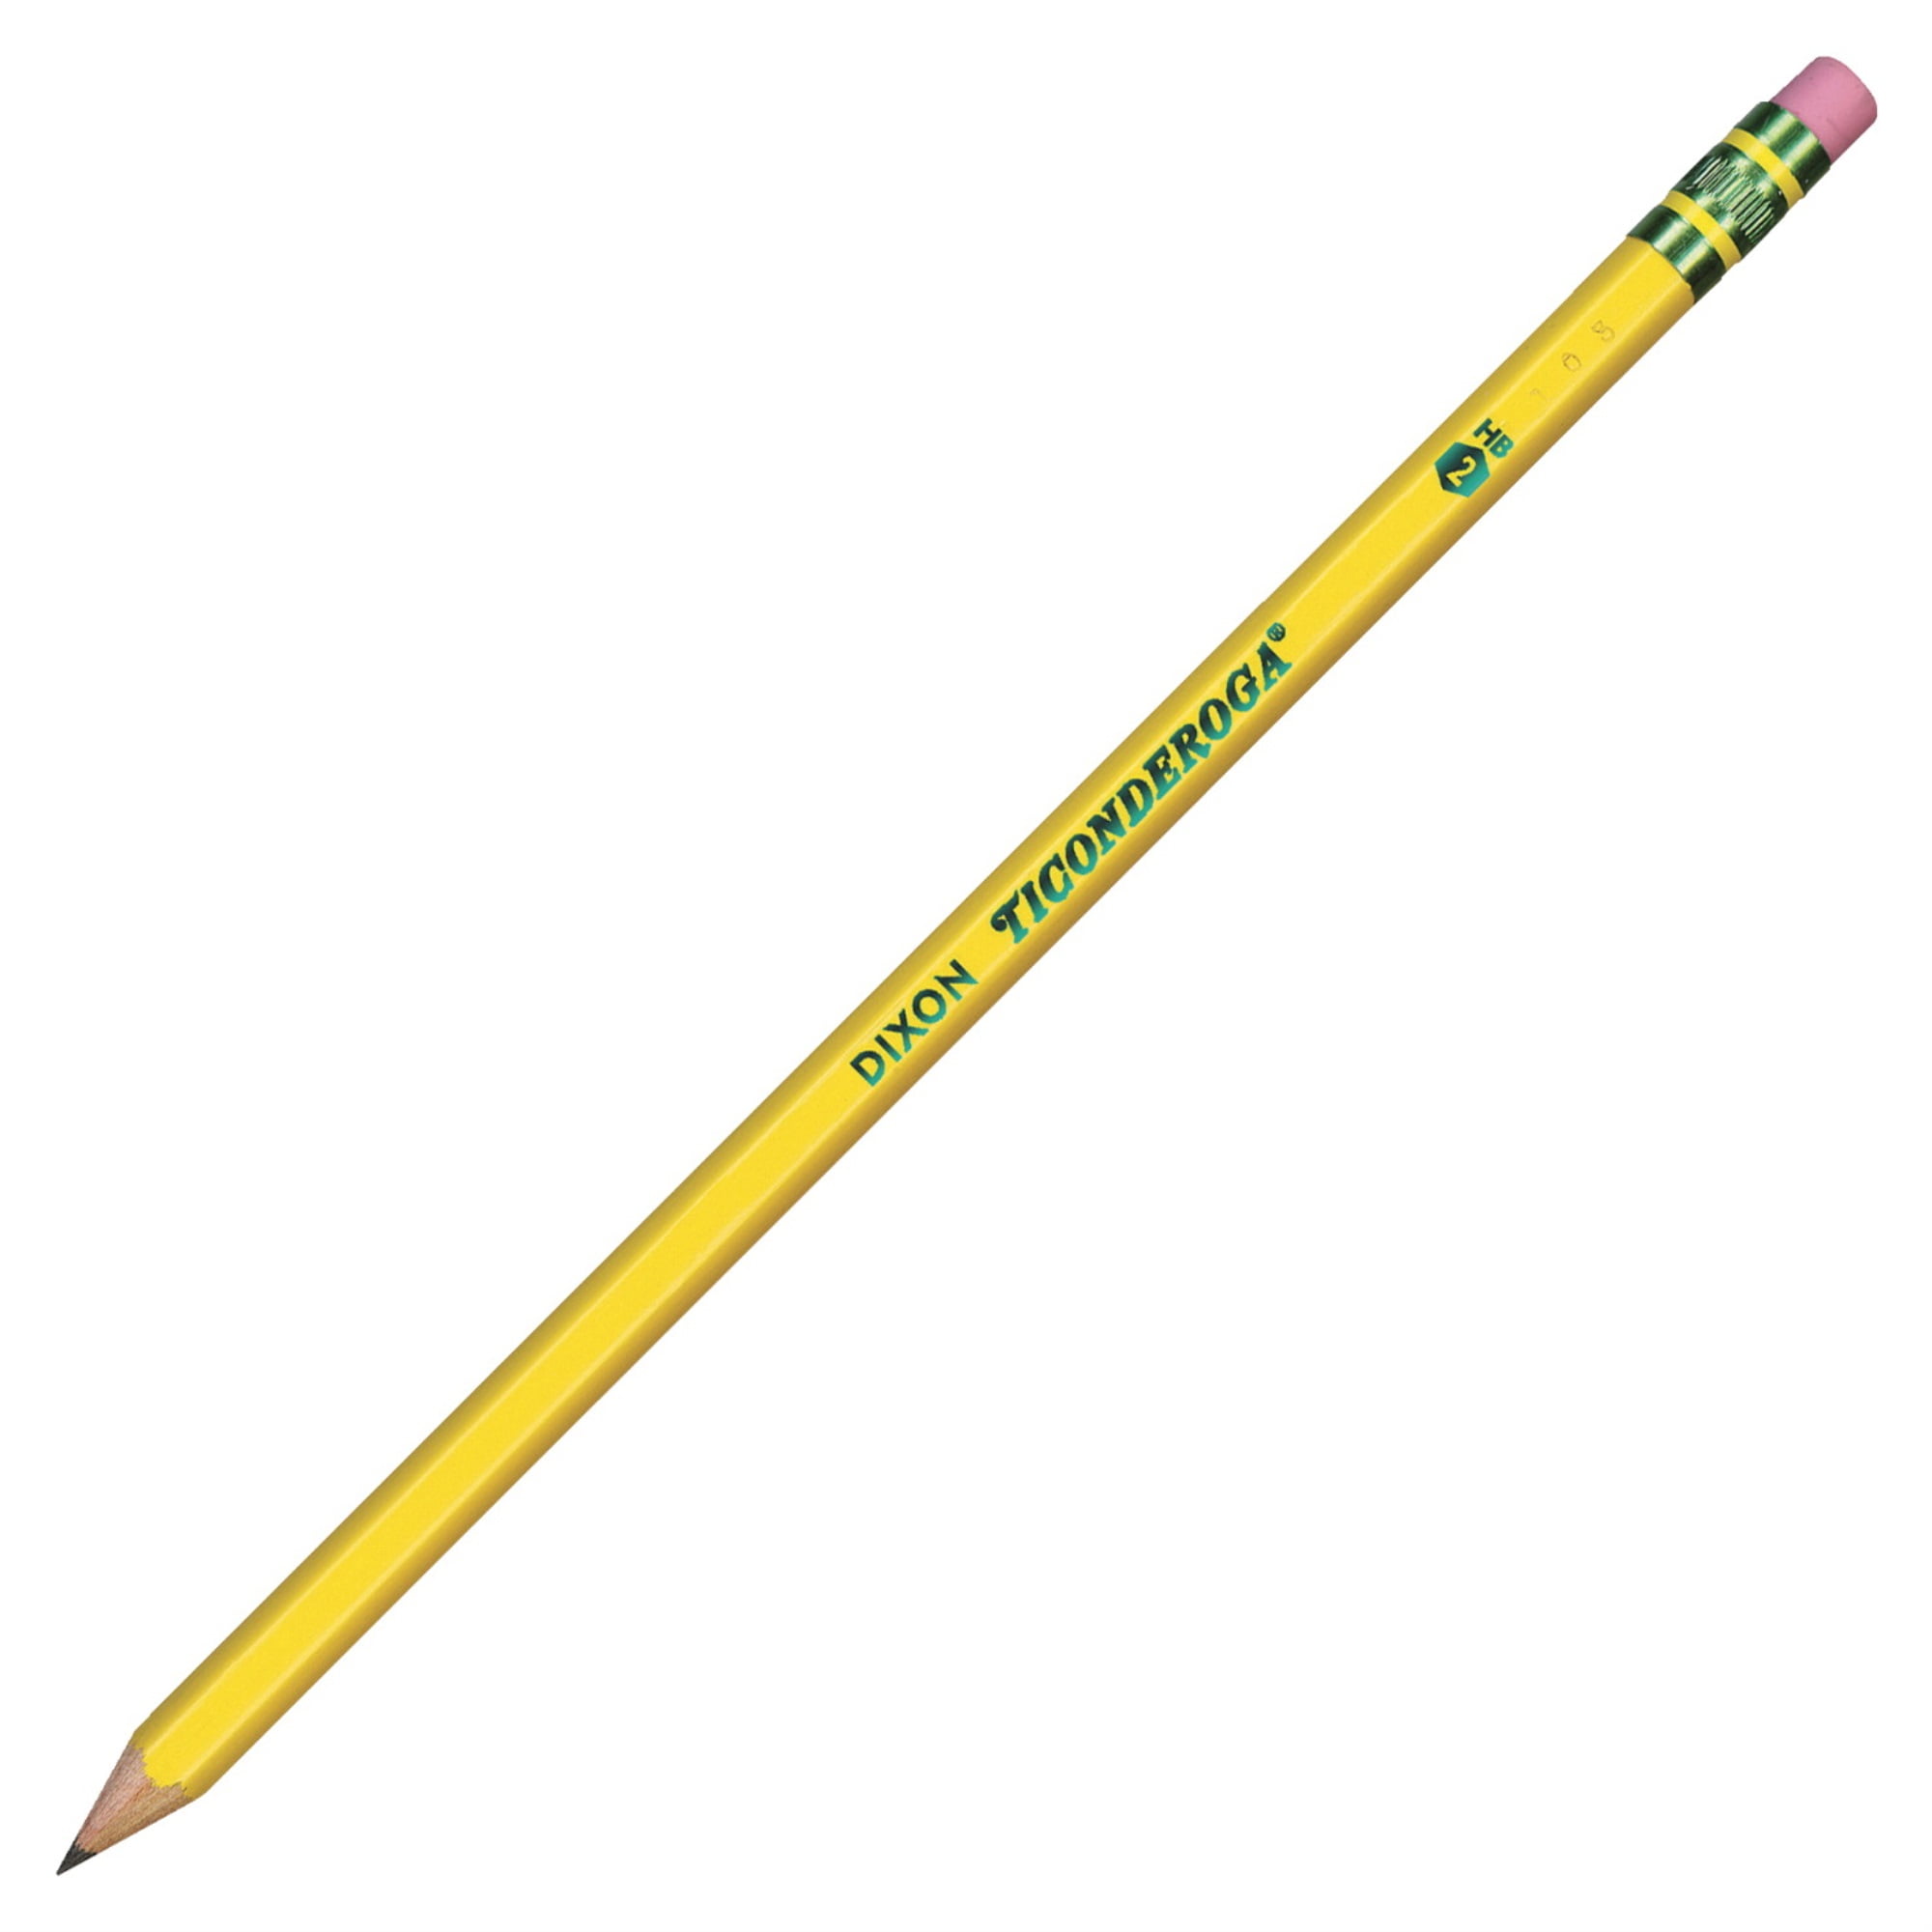 Ticonderoga Sharpened Cedarwood #2 Pencils 12ct **SCHOOL SUPPLIES** Shipp Inc. 